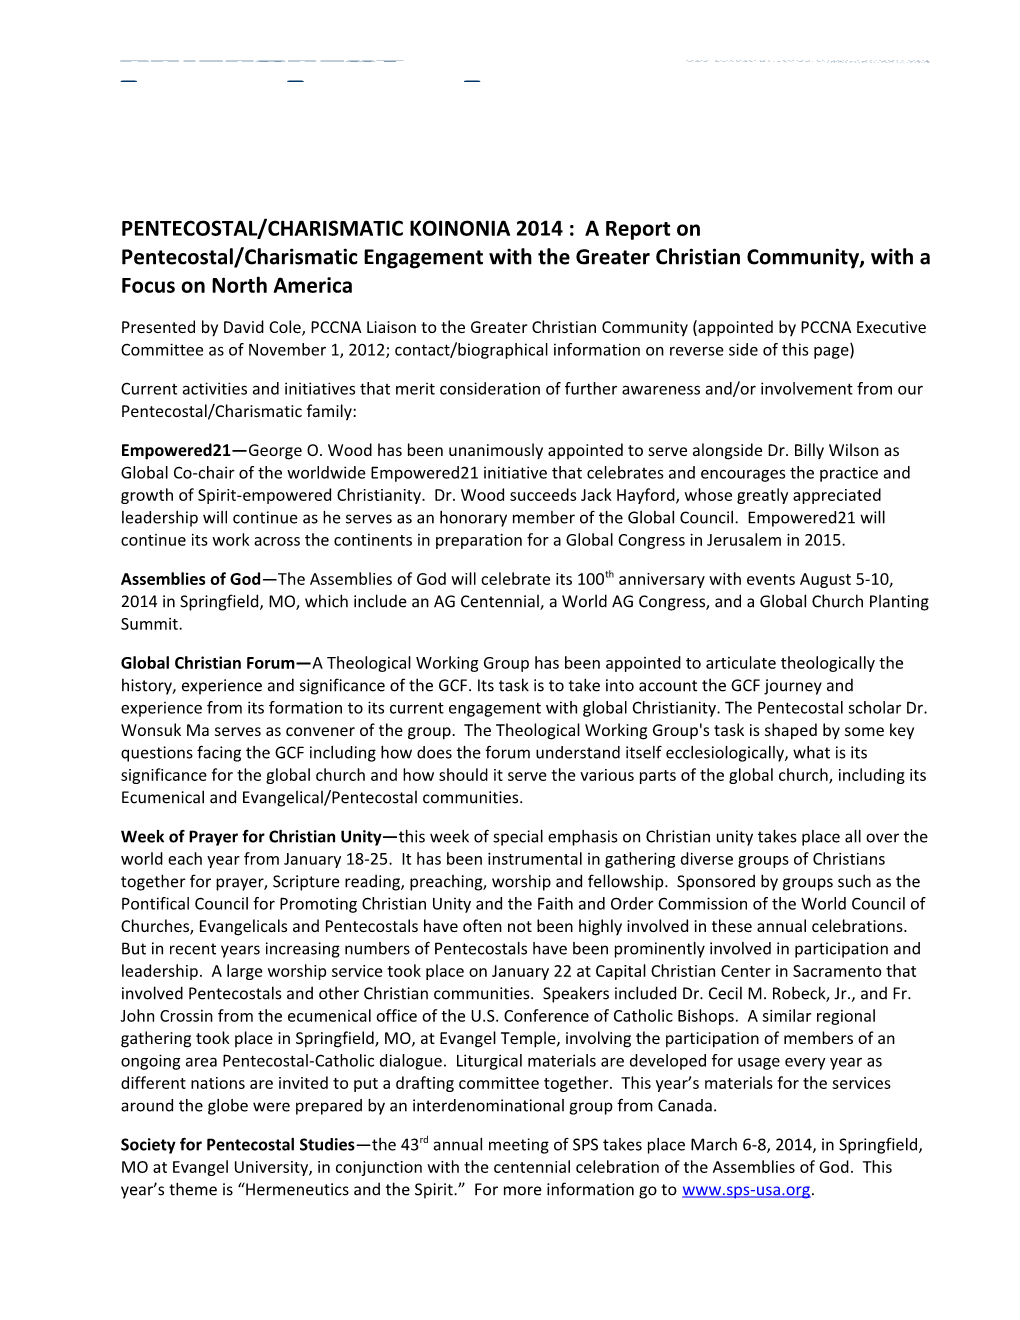 PENTECOSTAL/CHARISMATIC KOINONIA2014 : a Report on Pentecostal/Charismatic Engagement